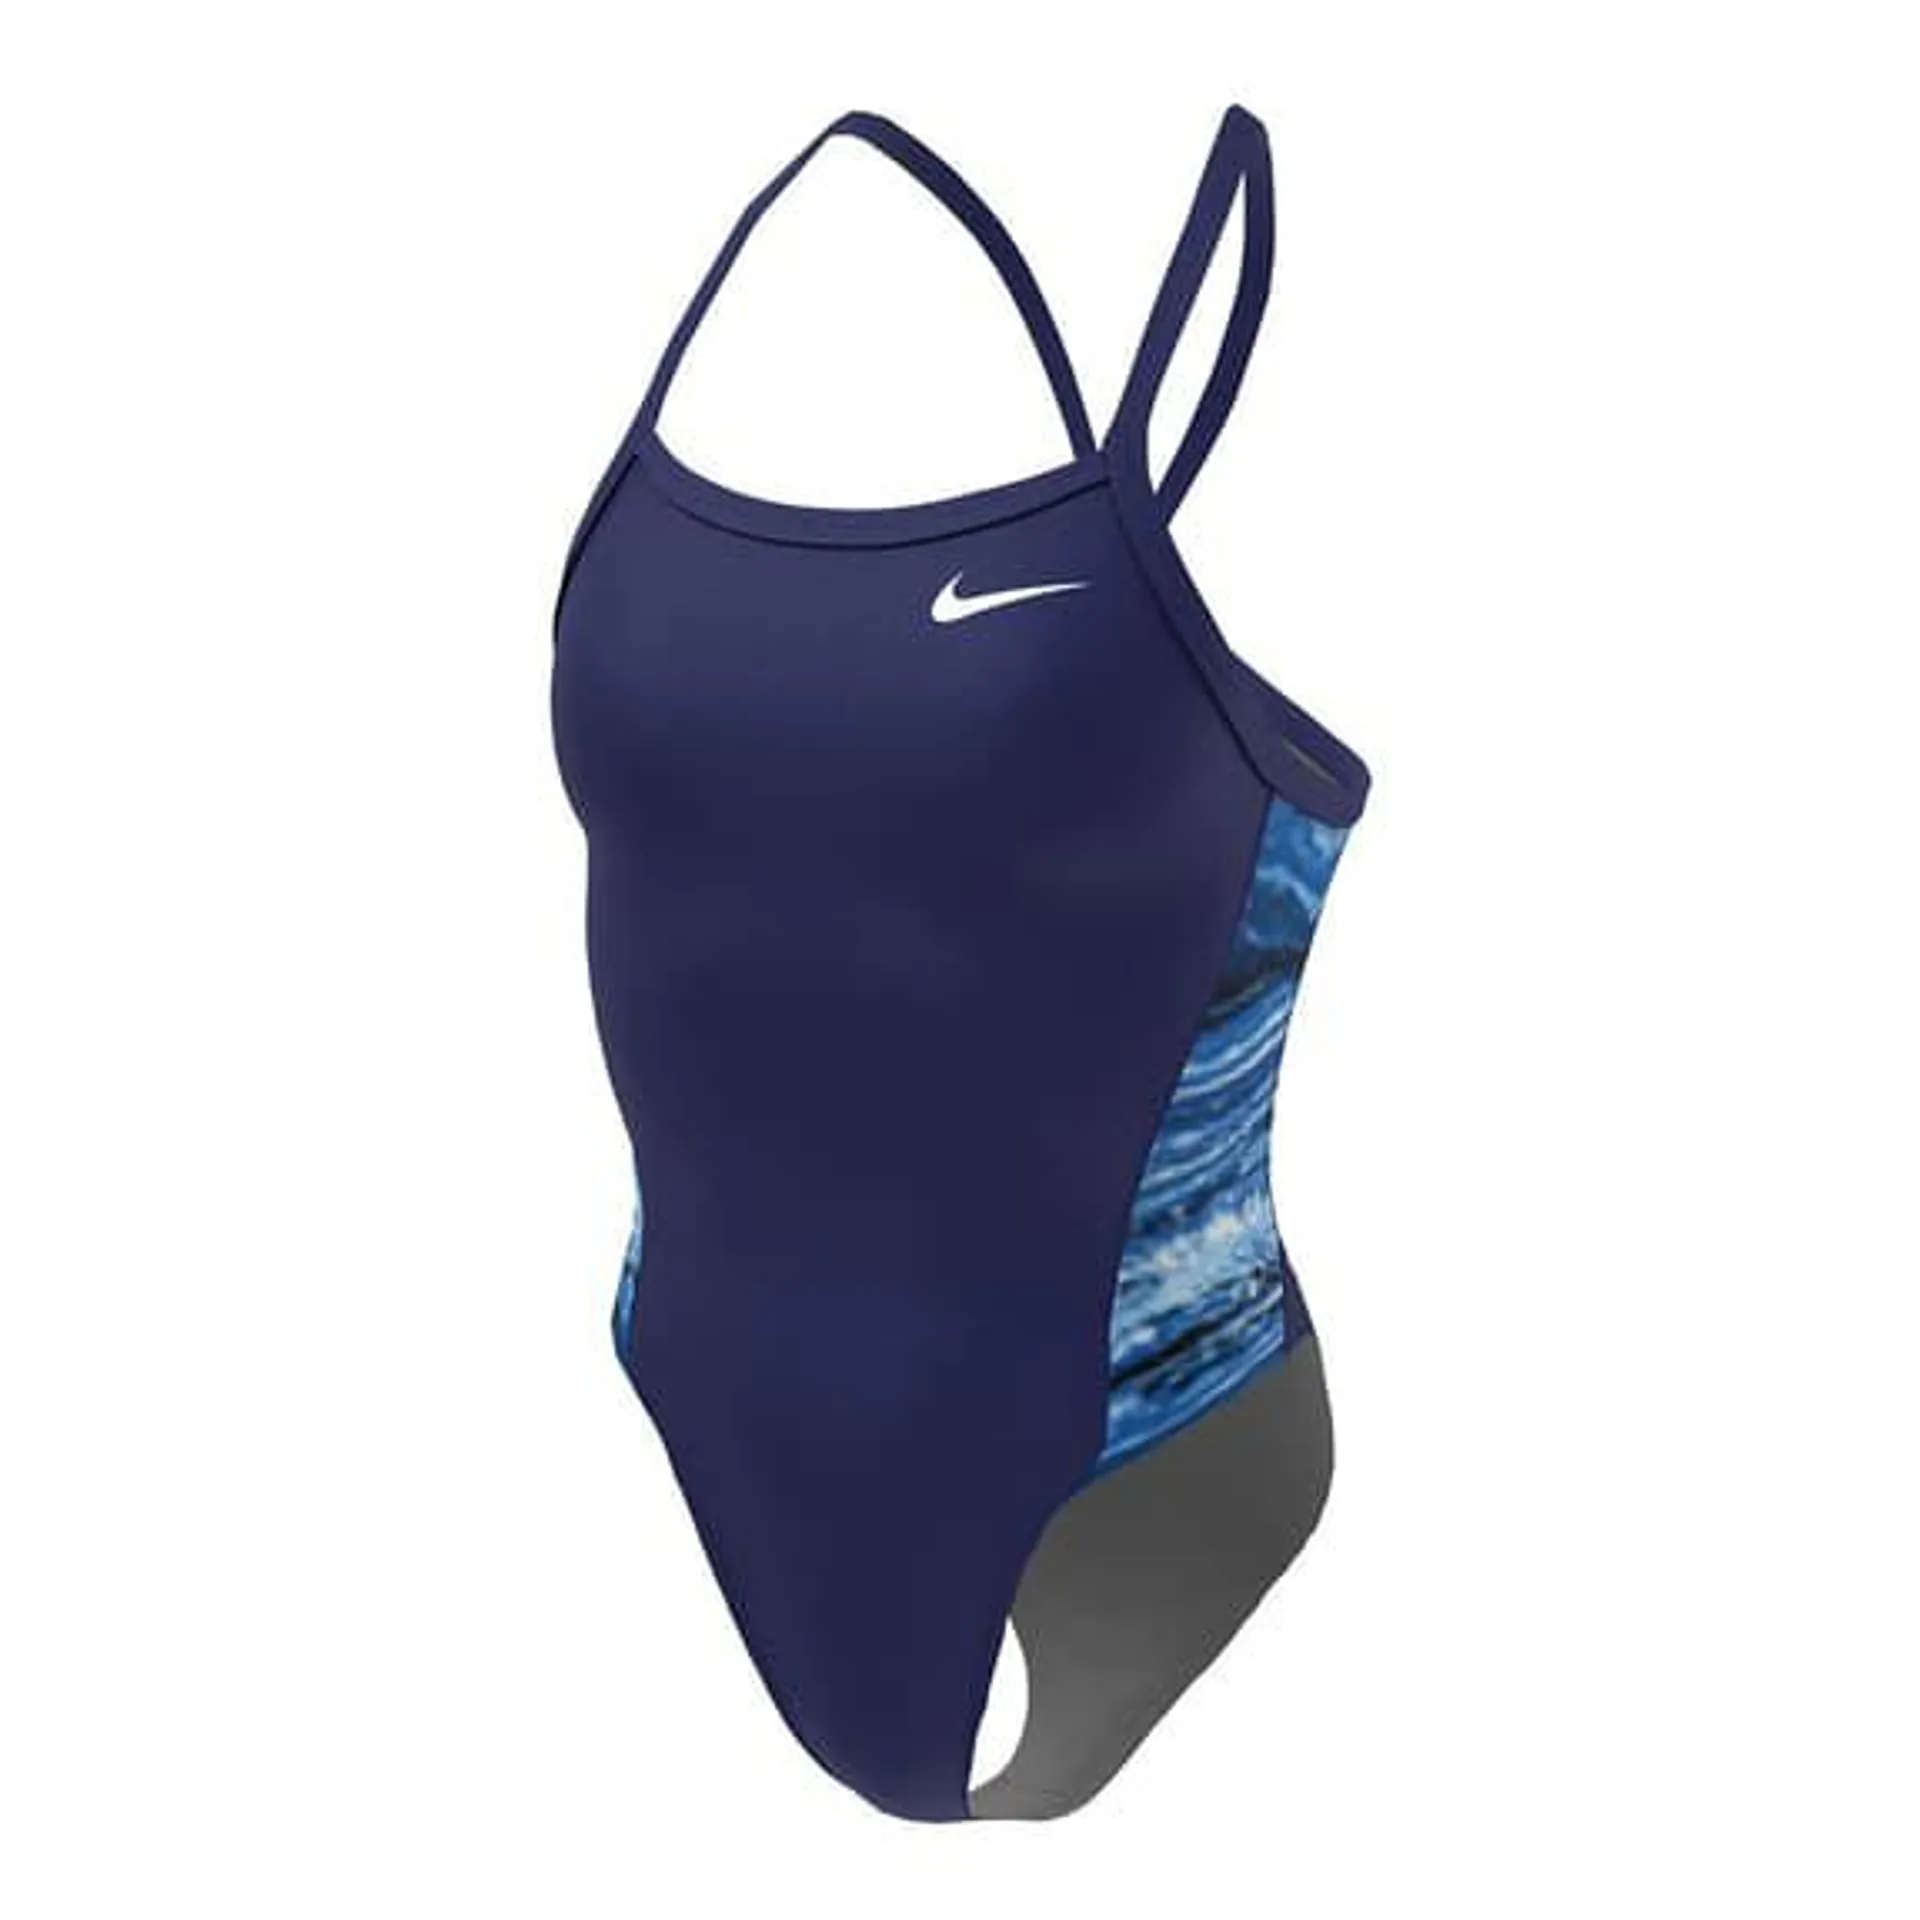 Maillot de bain Nike Swim Racerback femme